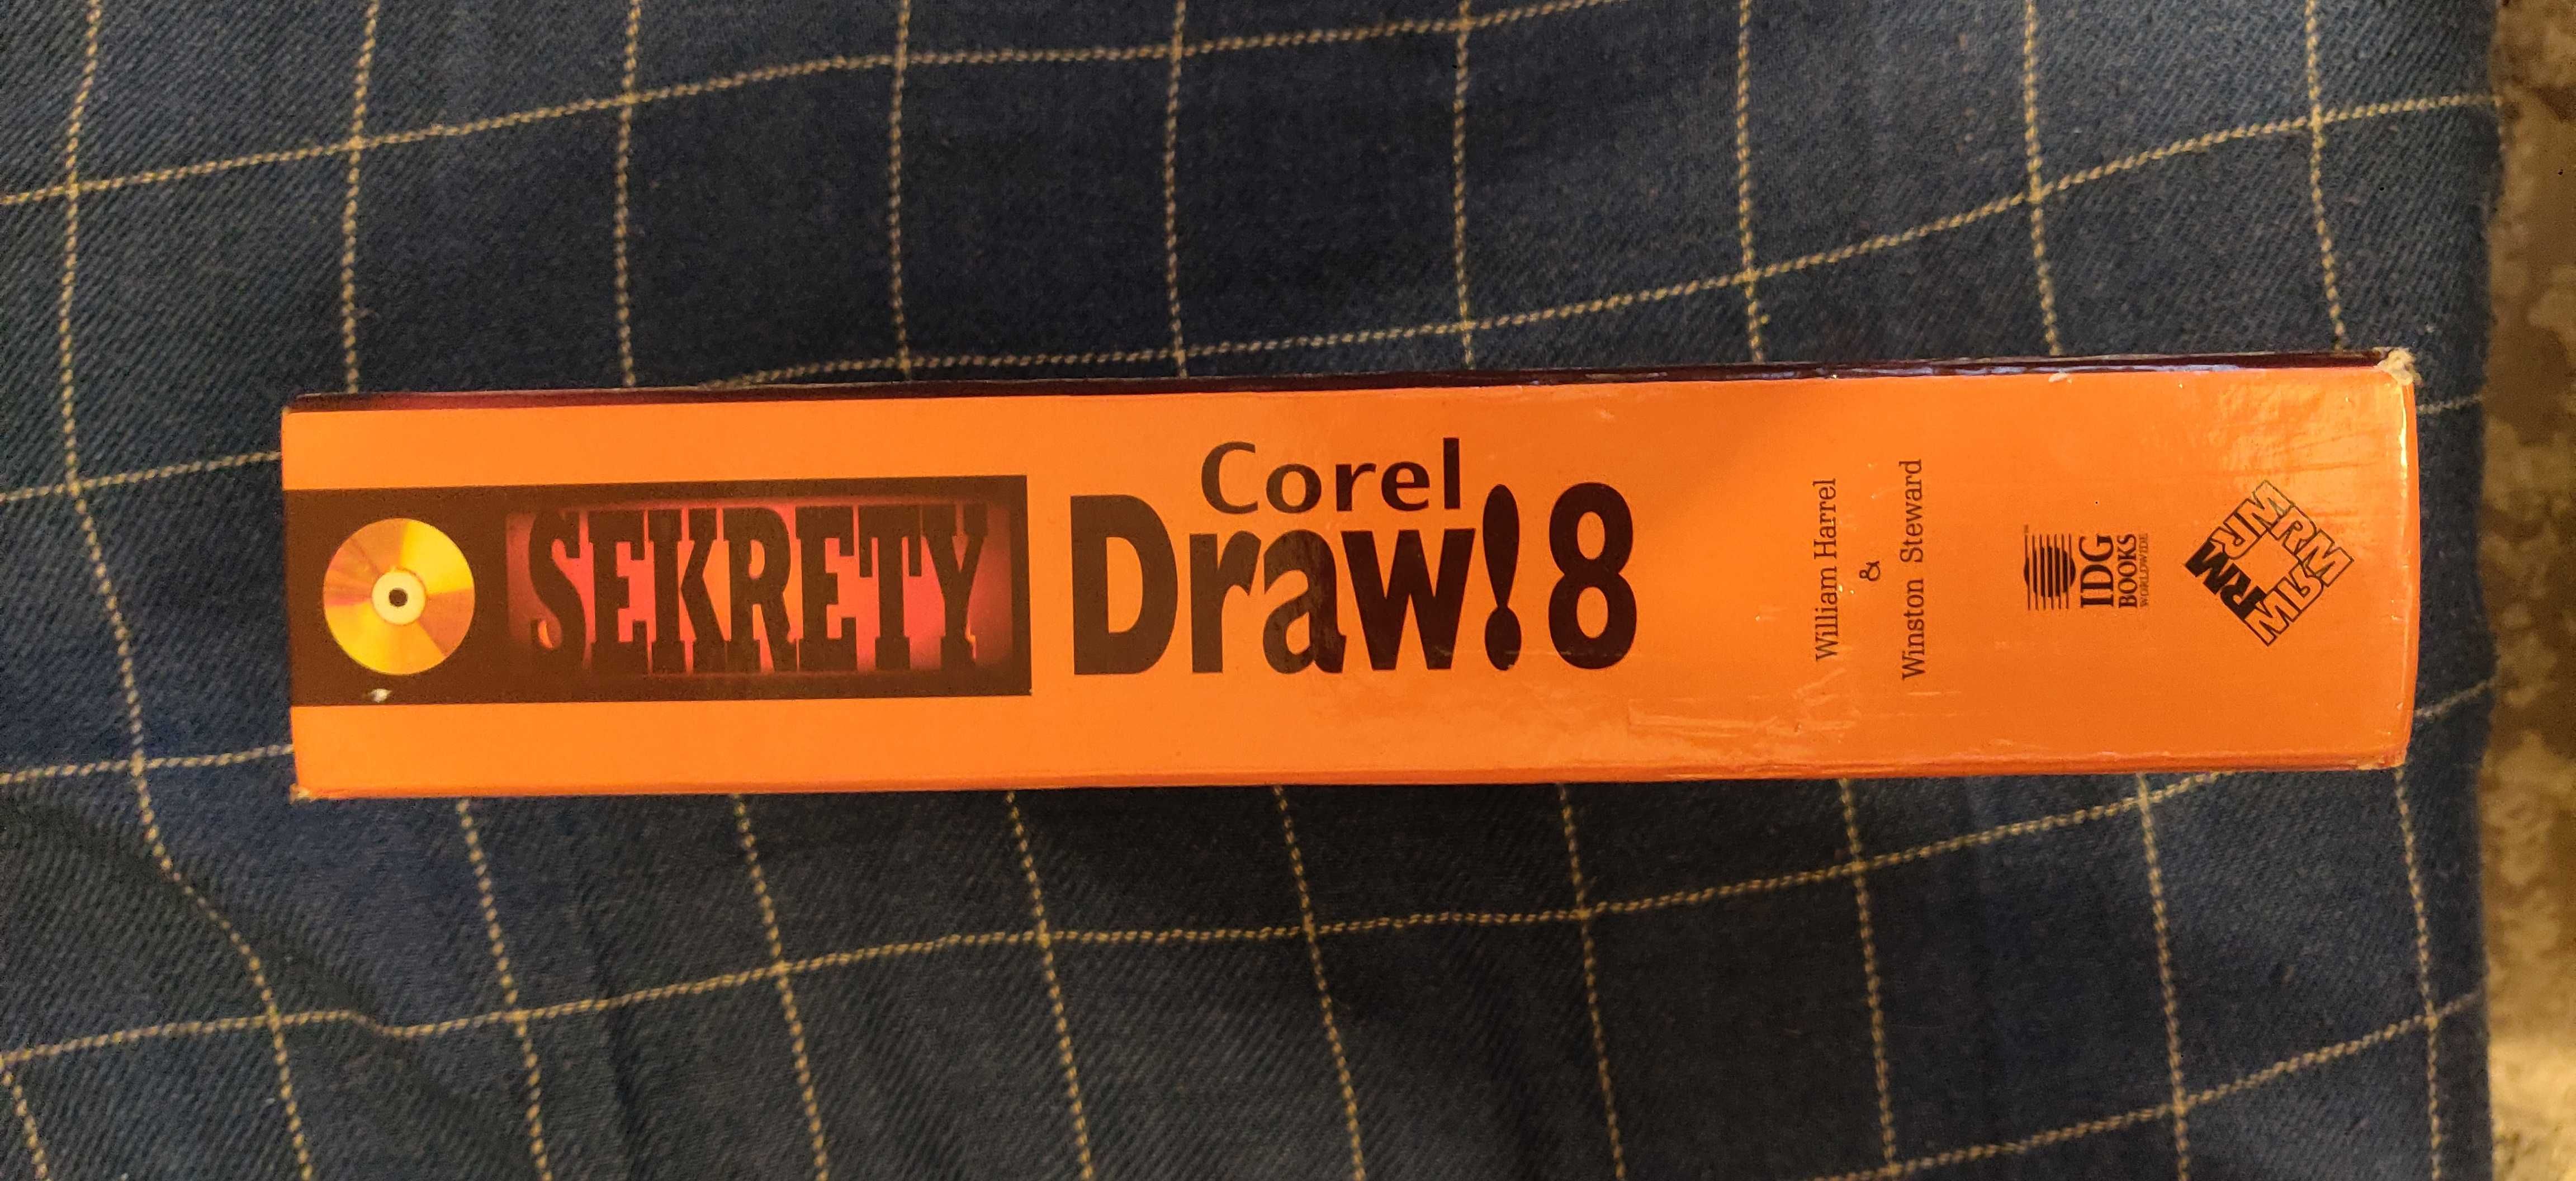 Harrel W., Steward W.: Sekrety Corel Draw!8